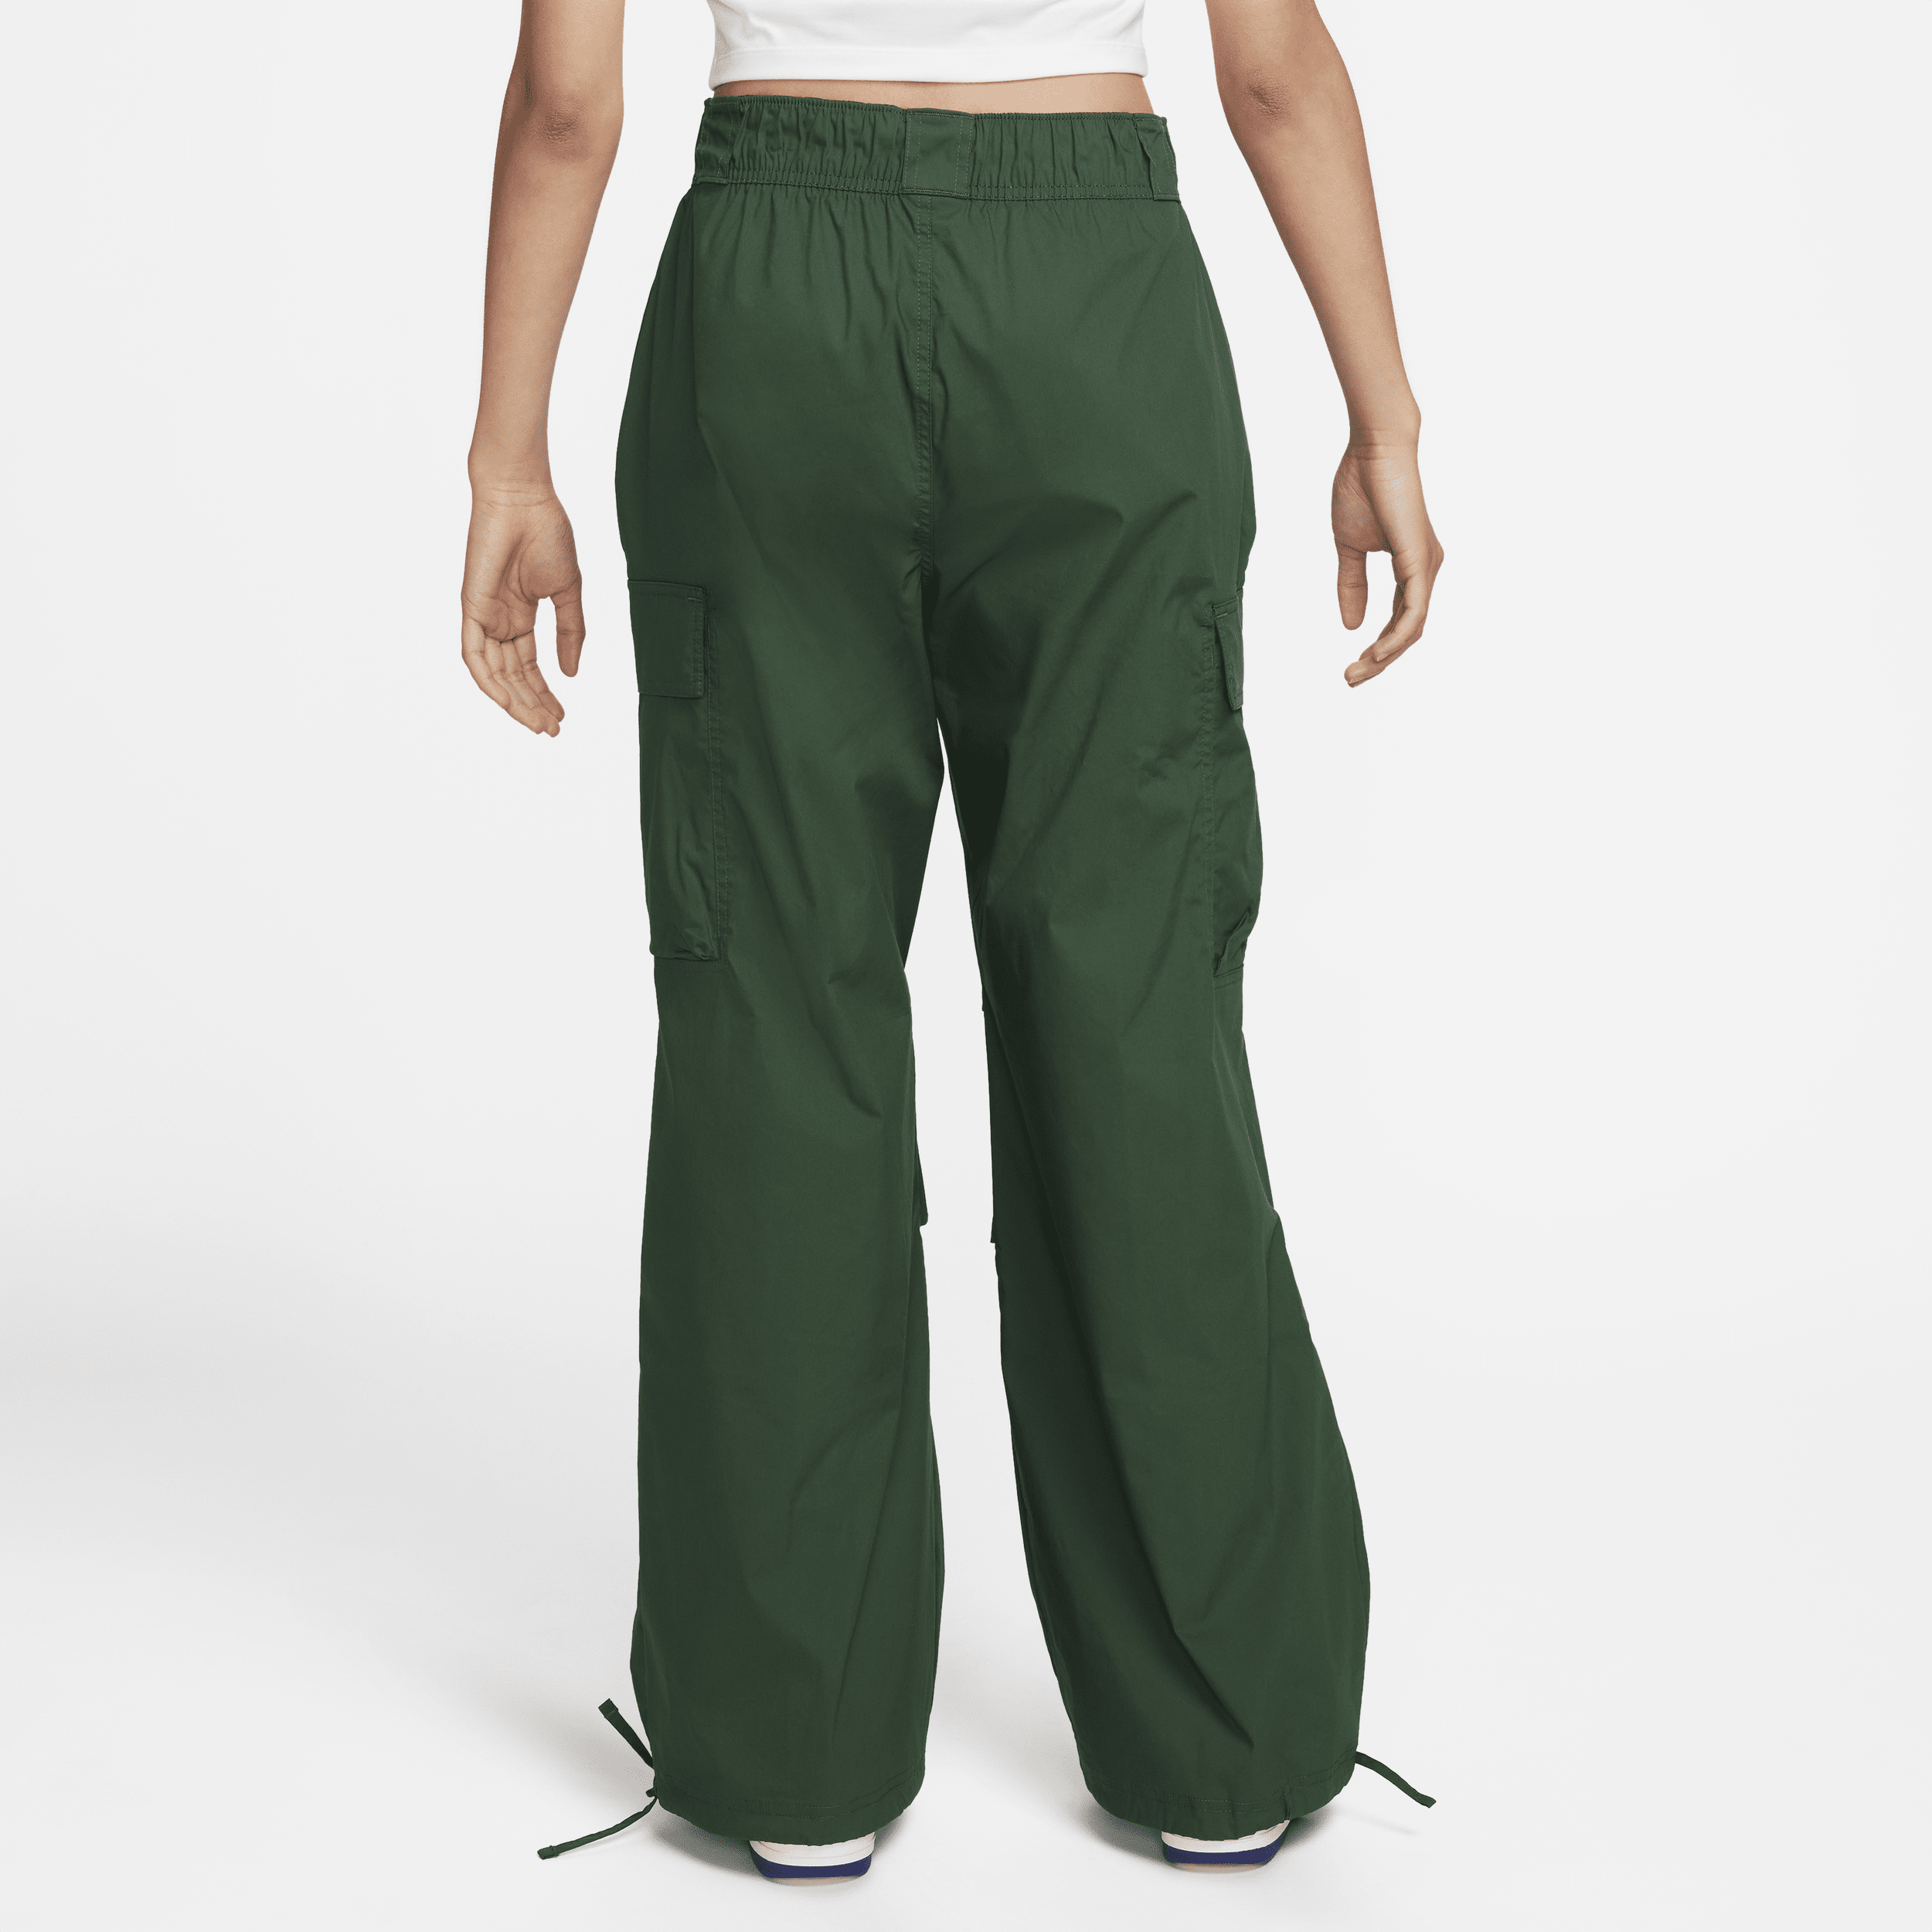 Nike Sportswear ruimvallende geweven cargobroek voor dames met hoge taille Groen